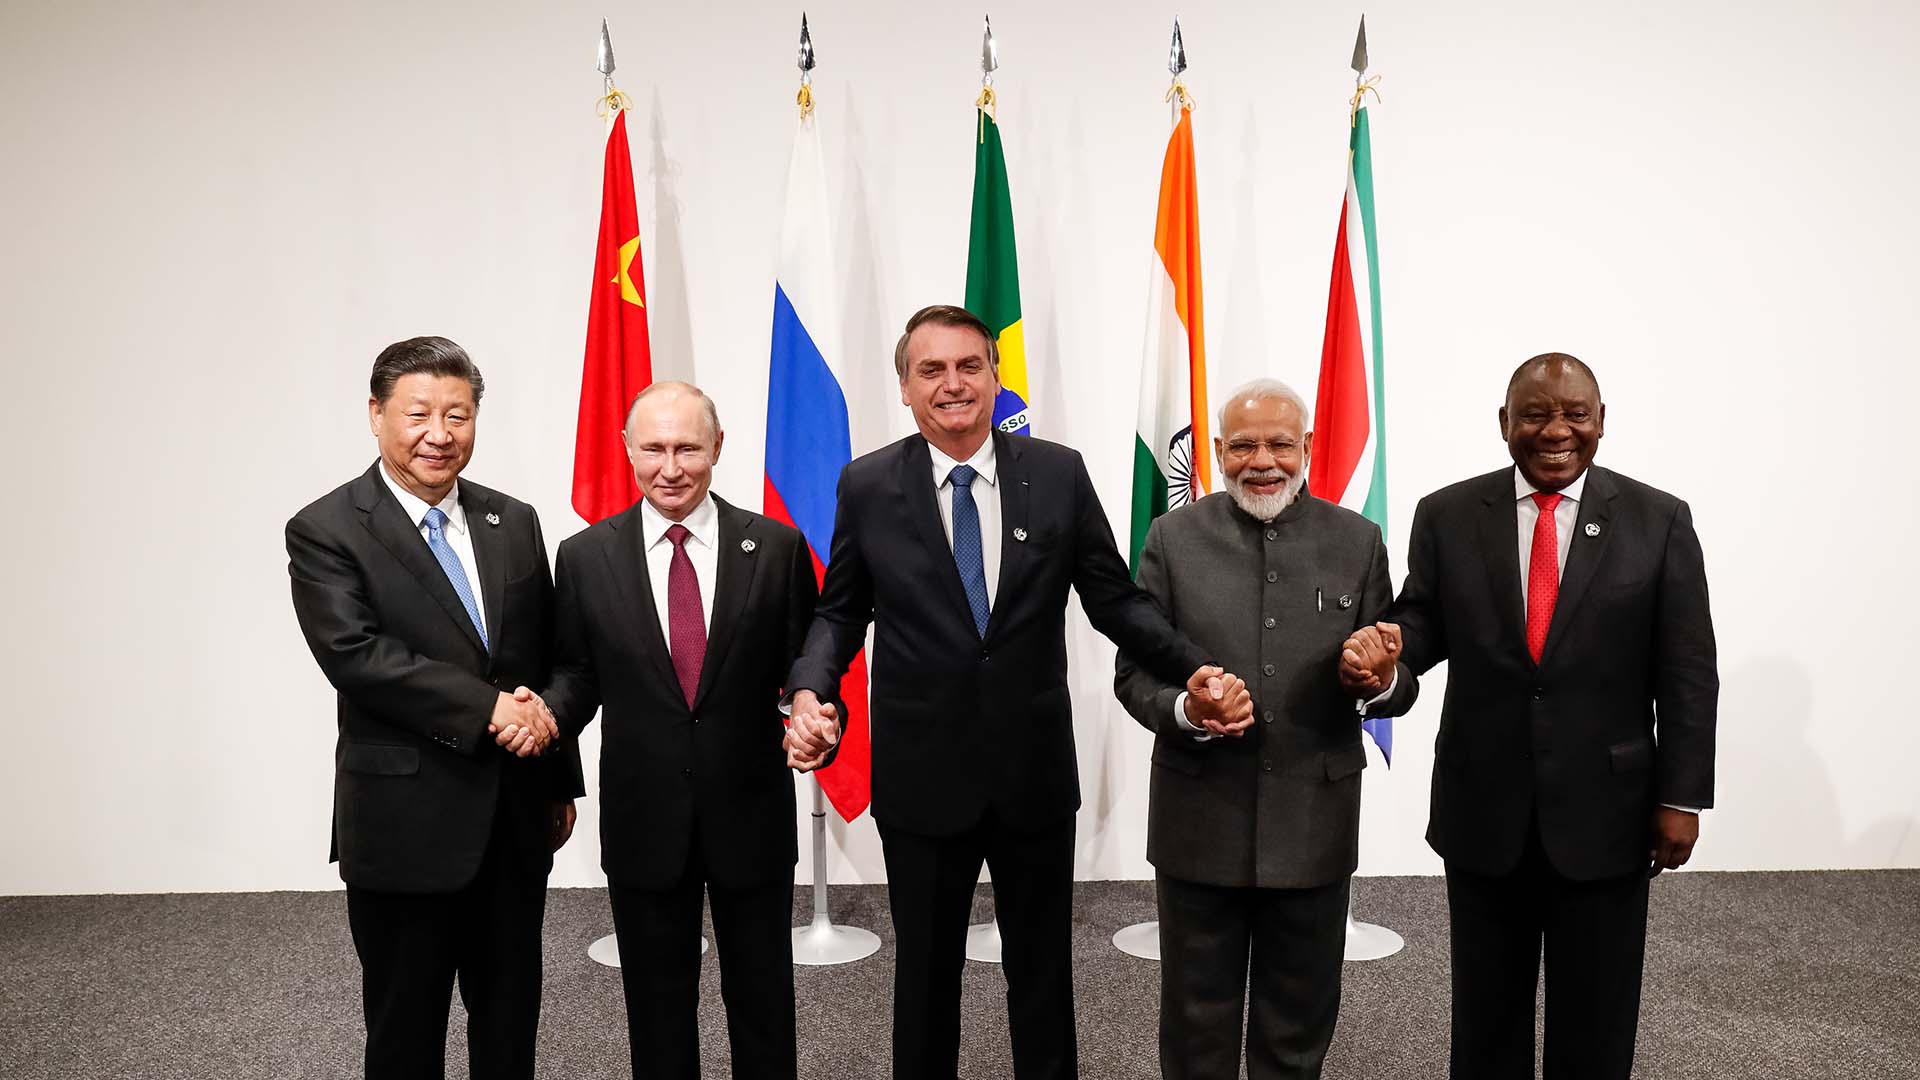 Informal_meeting_of_the_BRICS_during_the_2019_G20_Osaka_summit